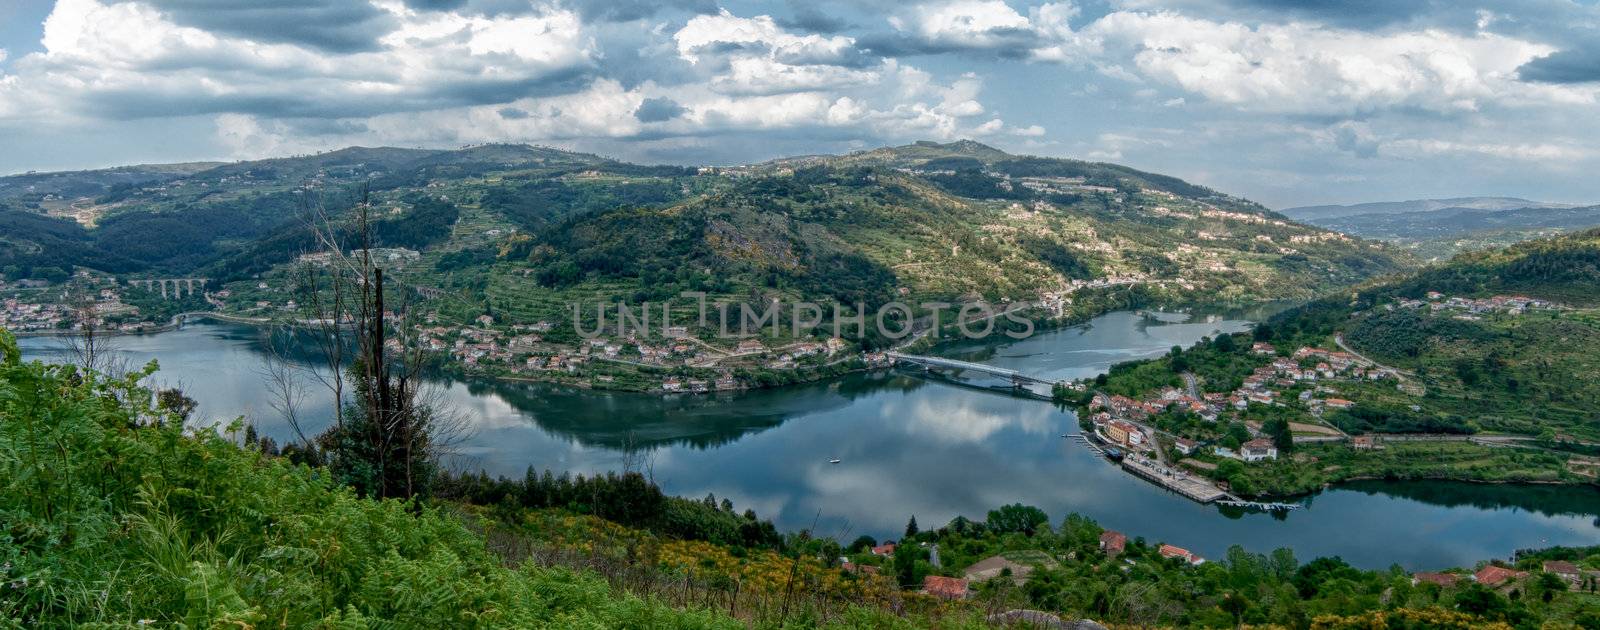 Douro Valley - Town Oliveira do Douro by homydesign